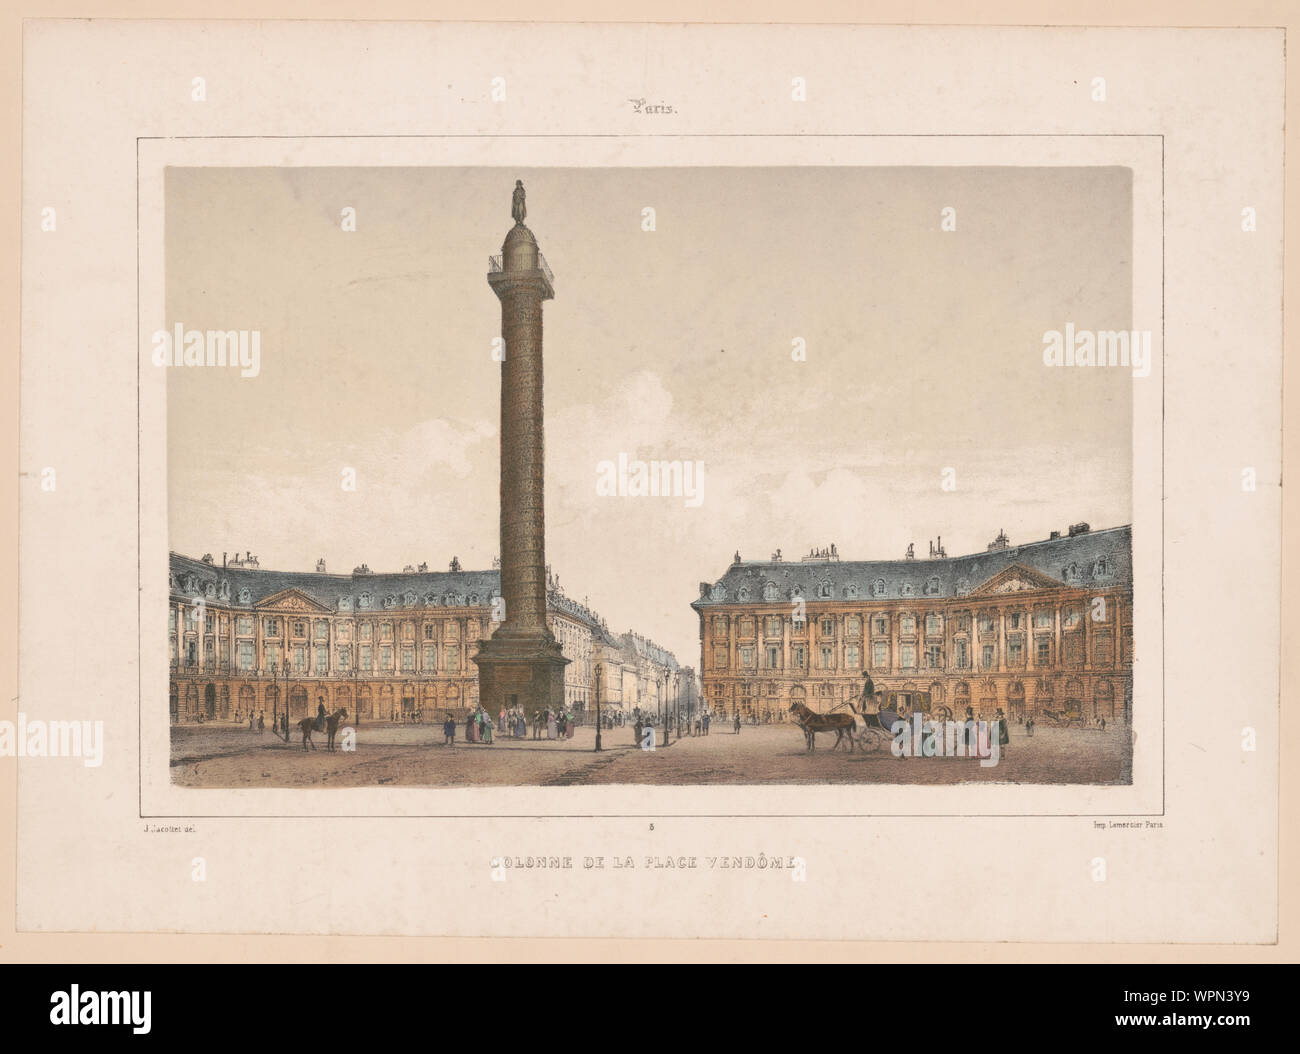 Paris. Colonne de la Place Vendôme; Print shows a street level view of Vendôme column at the center of a public square, erected during the reign of Napoleon I as a memorial to victory in the battle of Austerlitz.; Stock Photo